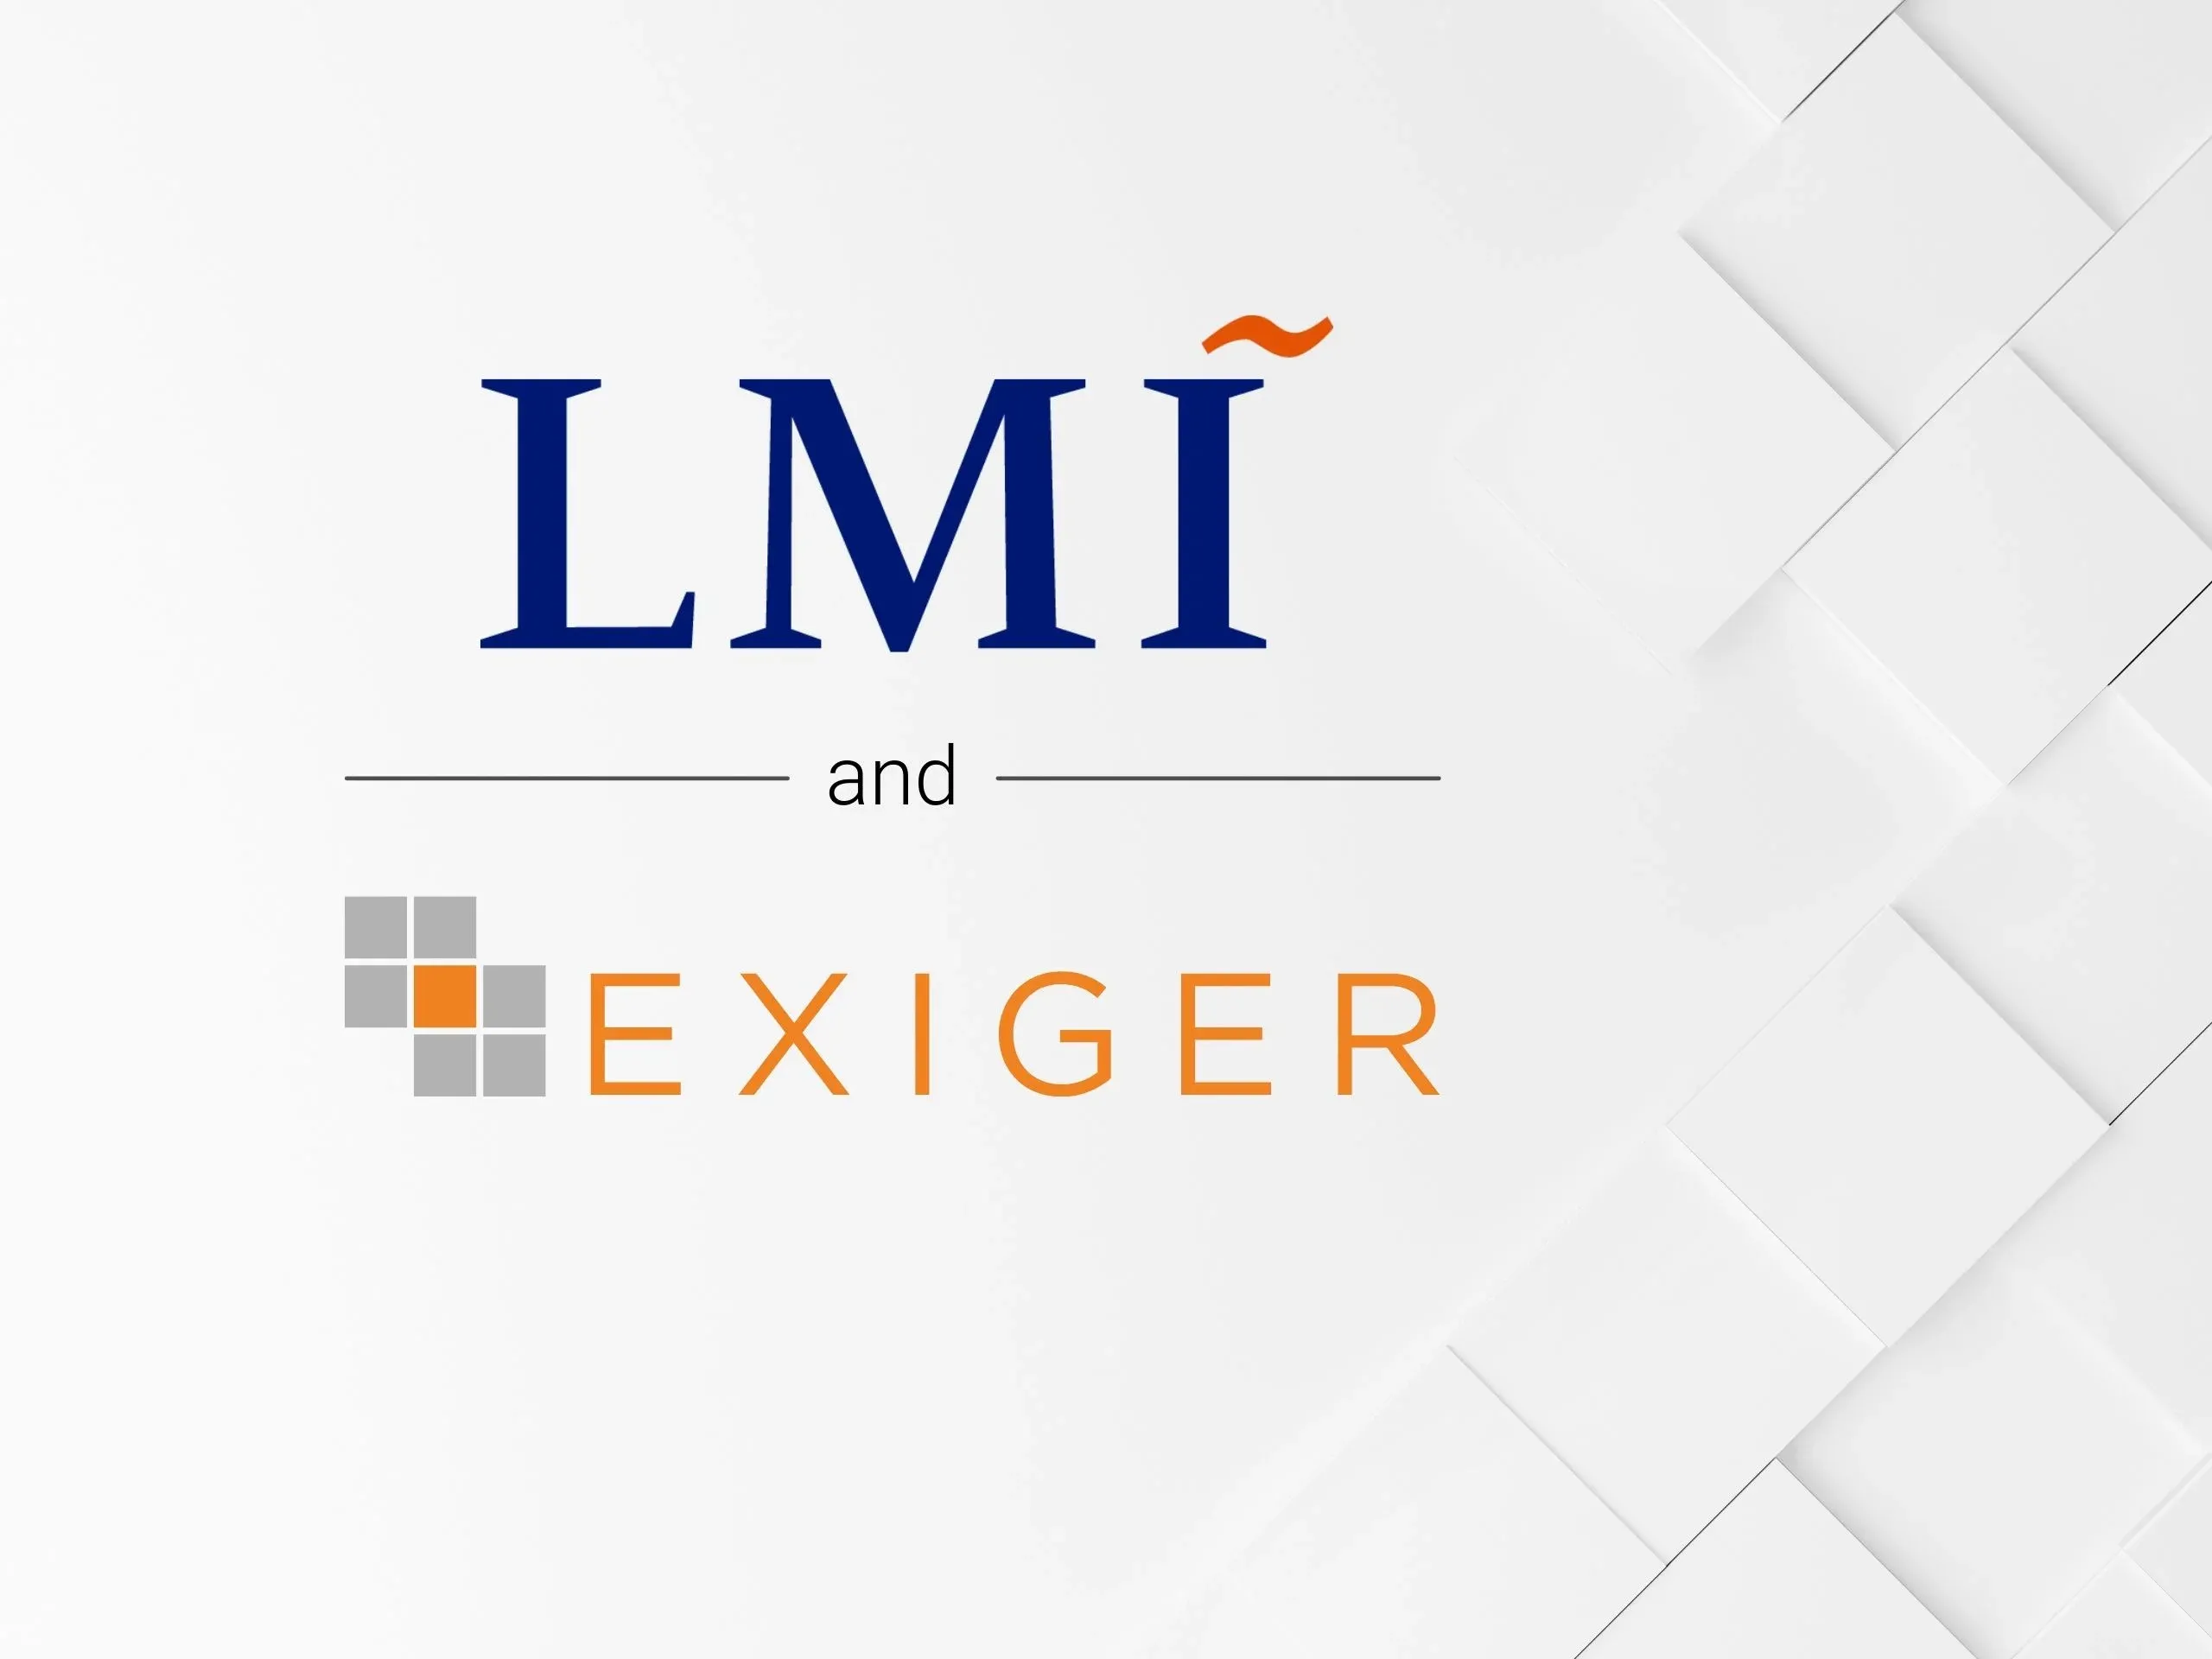 LMI and Exiger logos